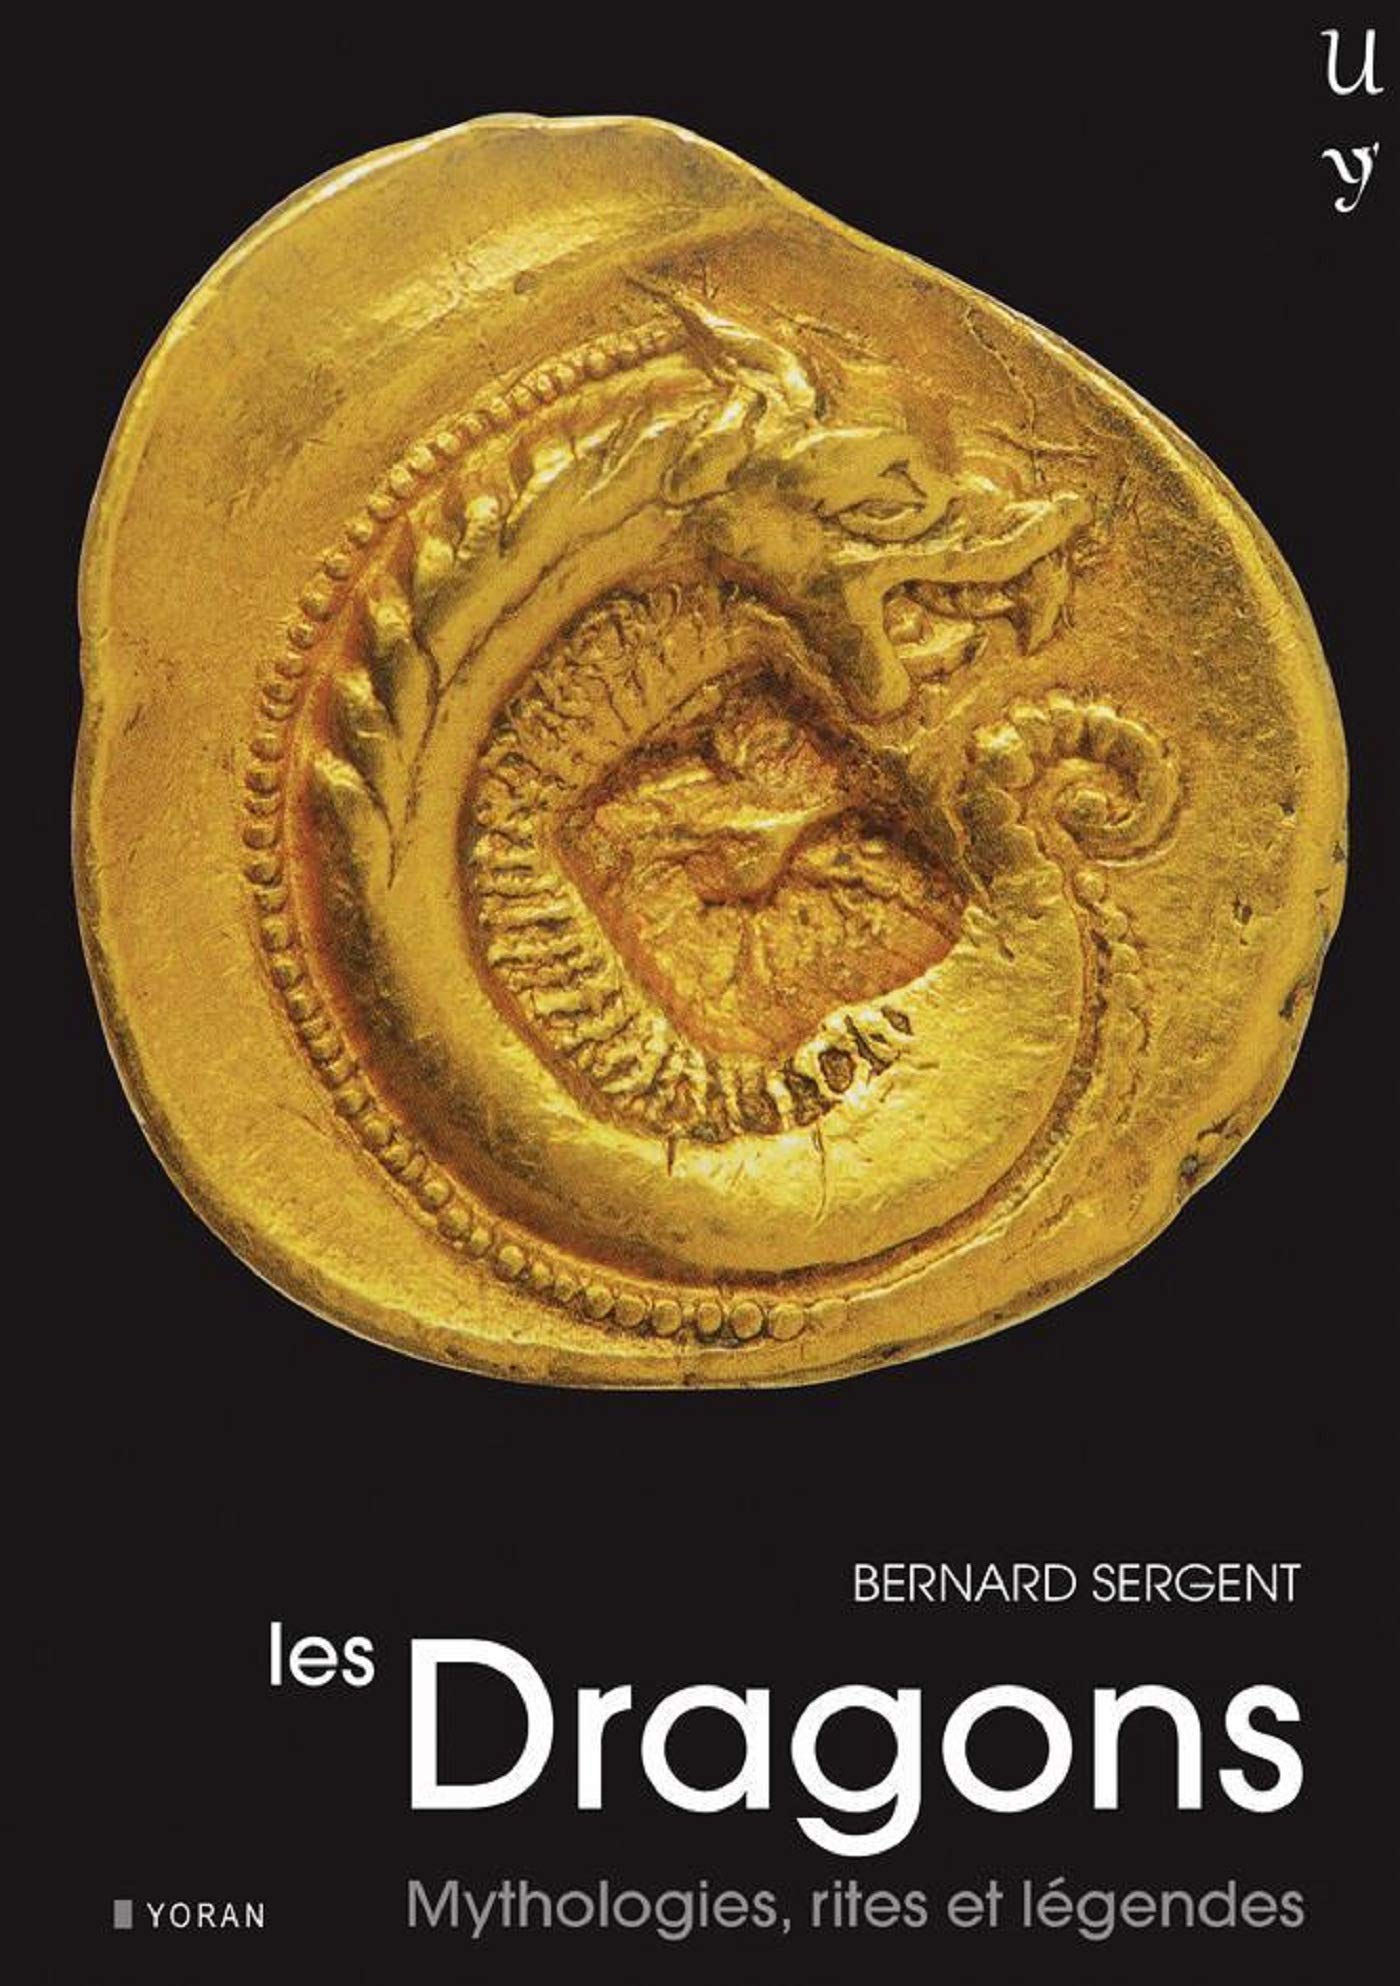 Les dragons. Mythologie, rites et légendes, 2018, 400 p.